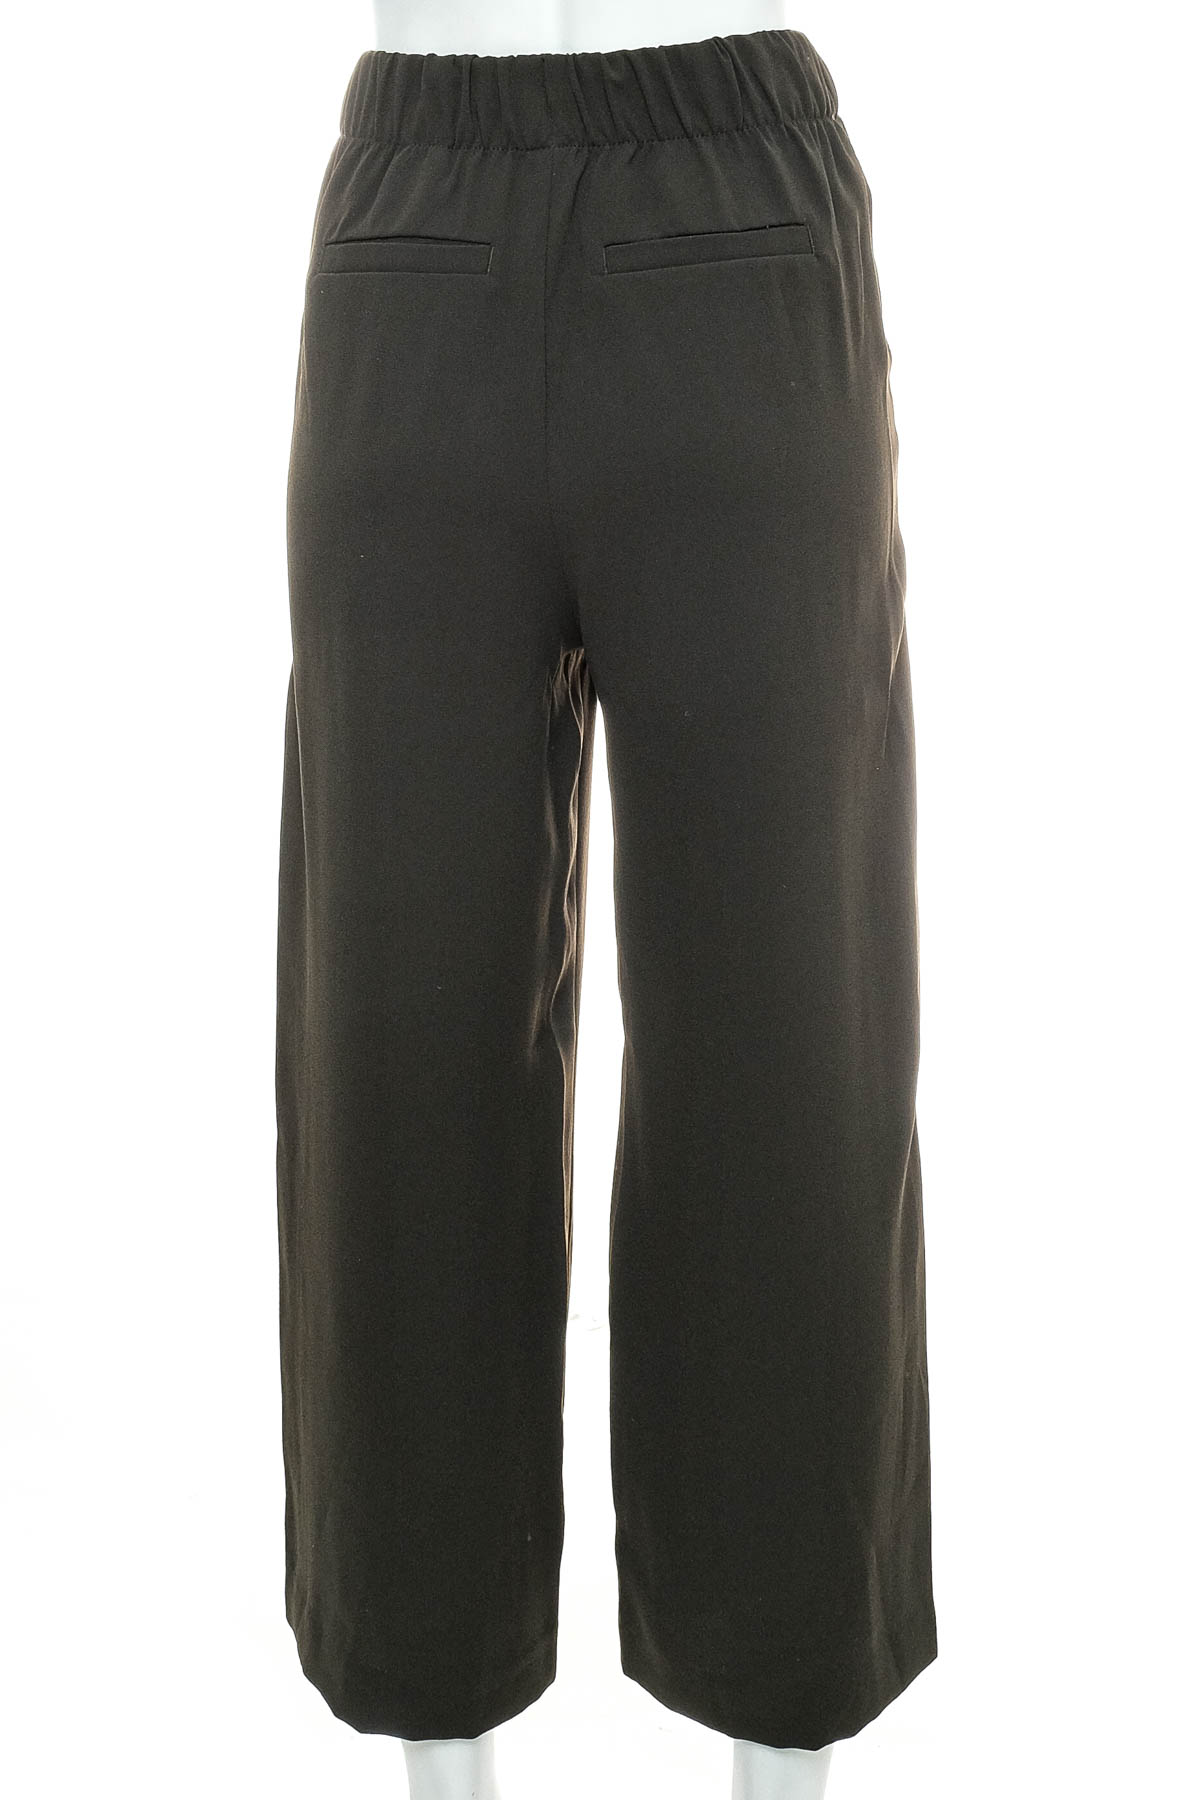 Women's trousers - H&M - 1